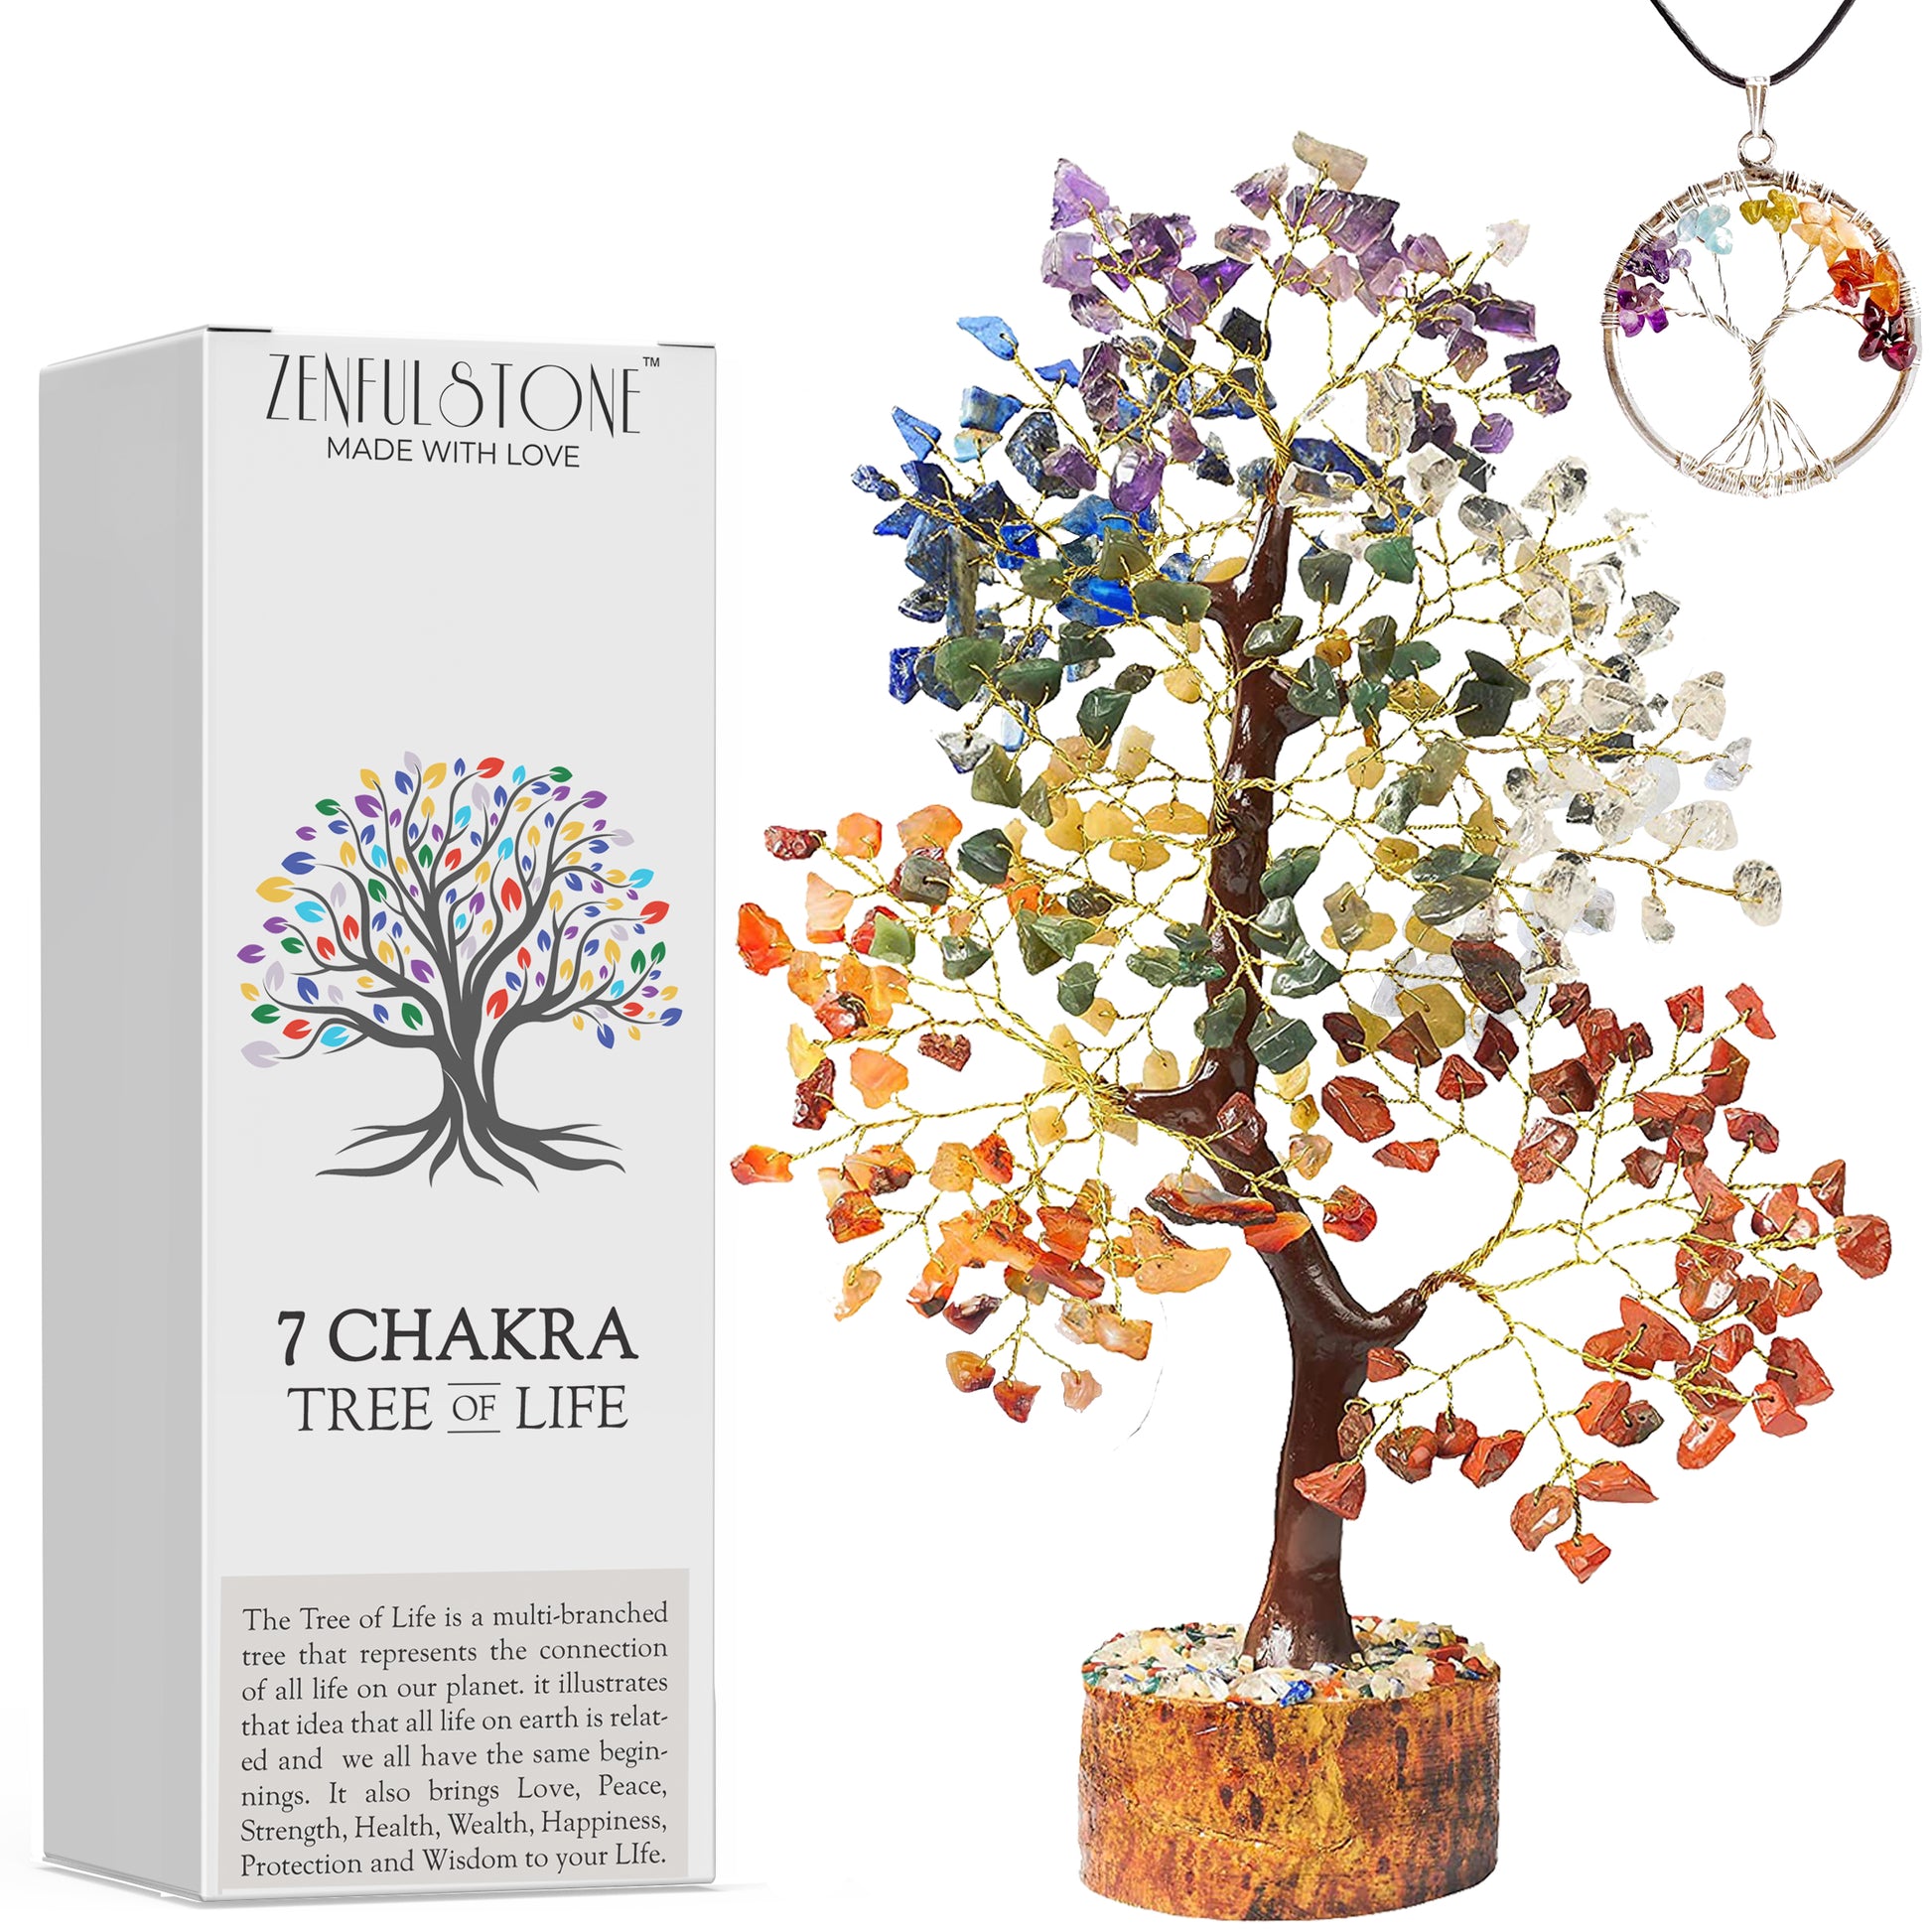  Clear Quartz Crystal Tree of Life - Chakra Tree for Positive  Energy, Feng Shui Decor - Gemstone Money Bonsai Tree, Good Luck Healing  Crystals - Meditation Stones, Spiritual Unique Gift 10-12 